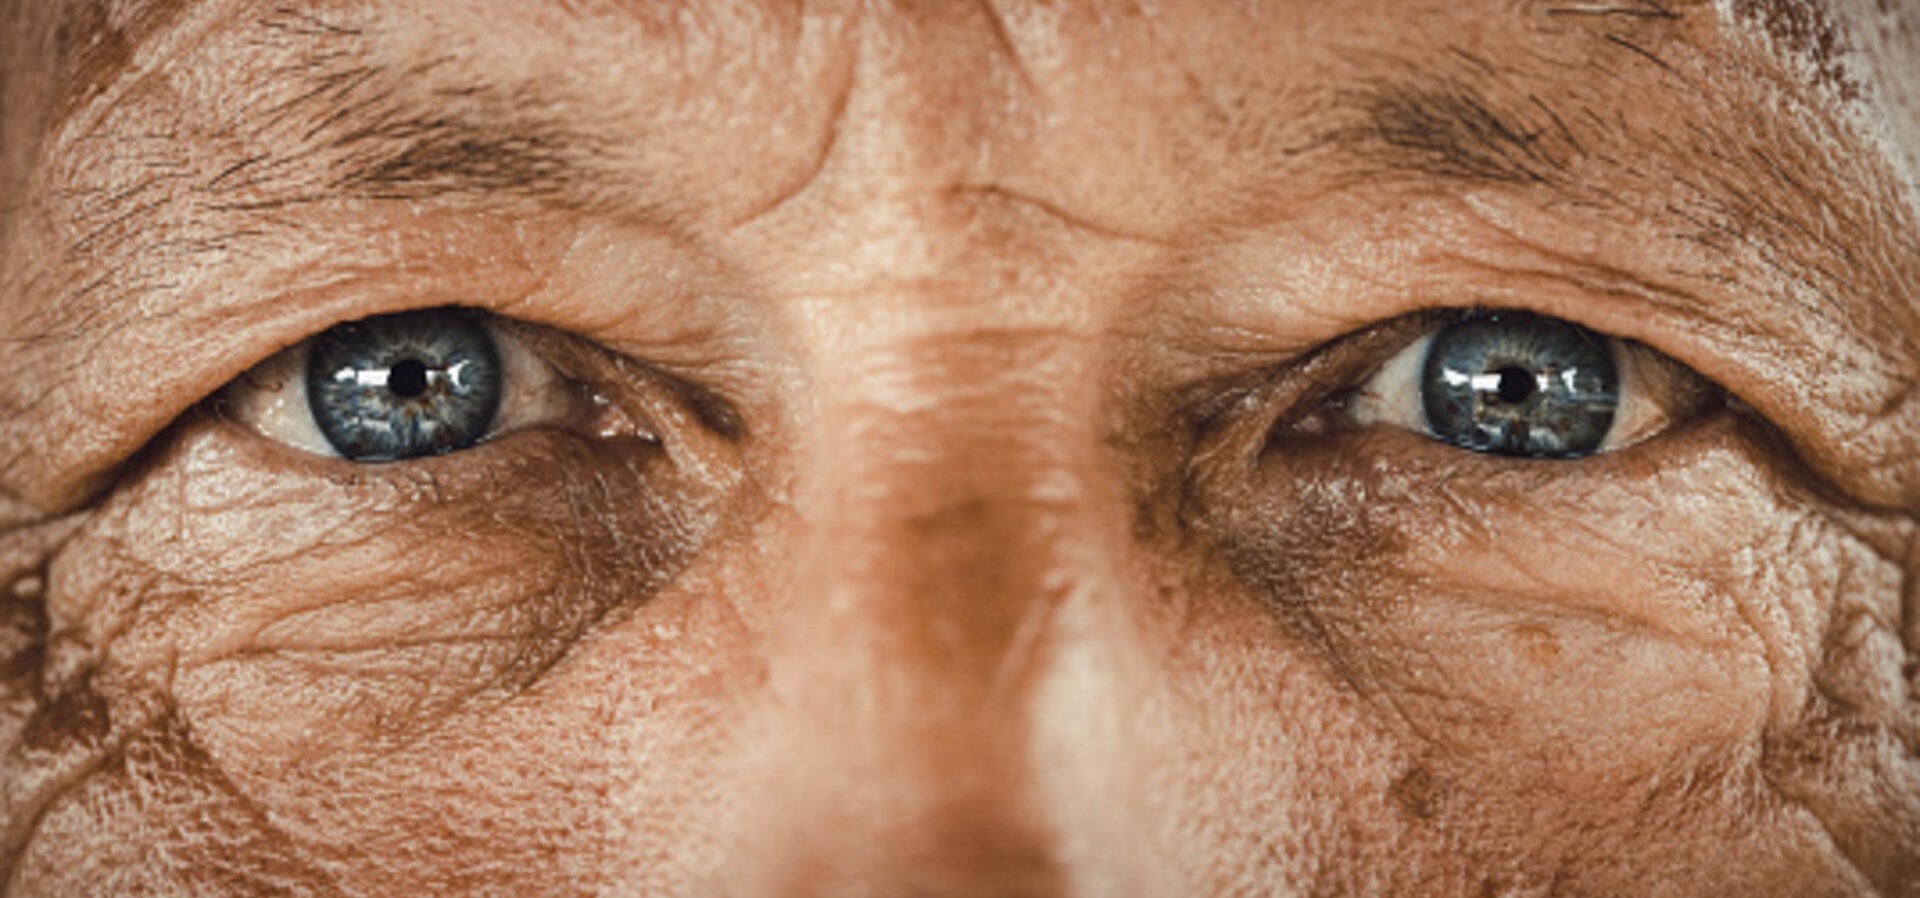 stock image of elderly man's eyes.